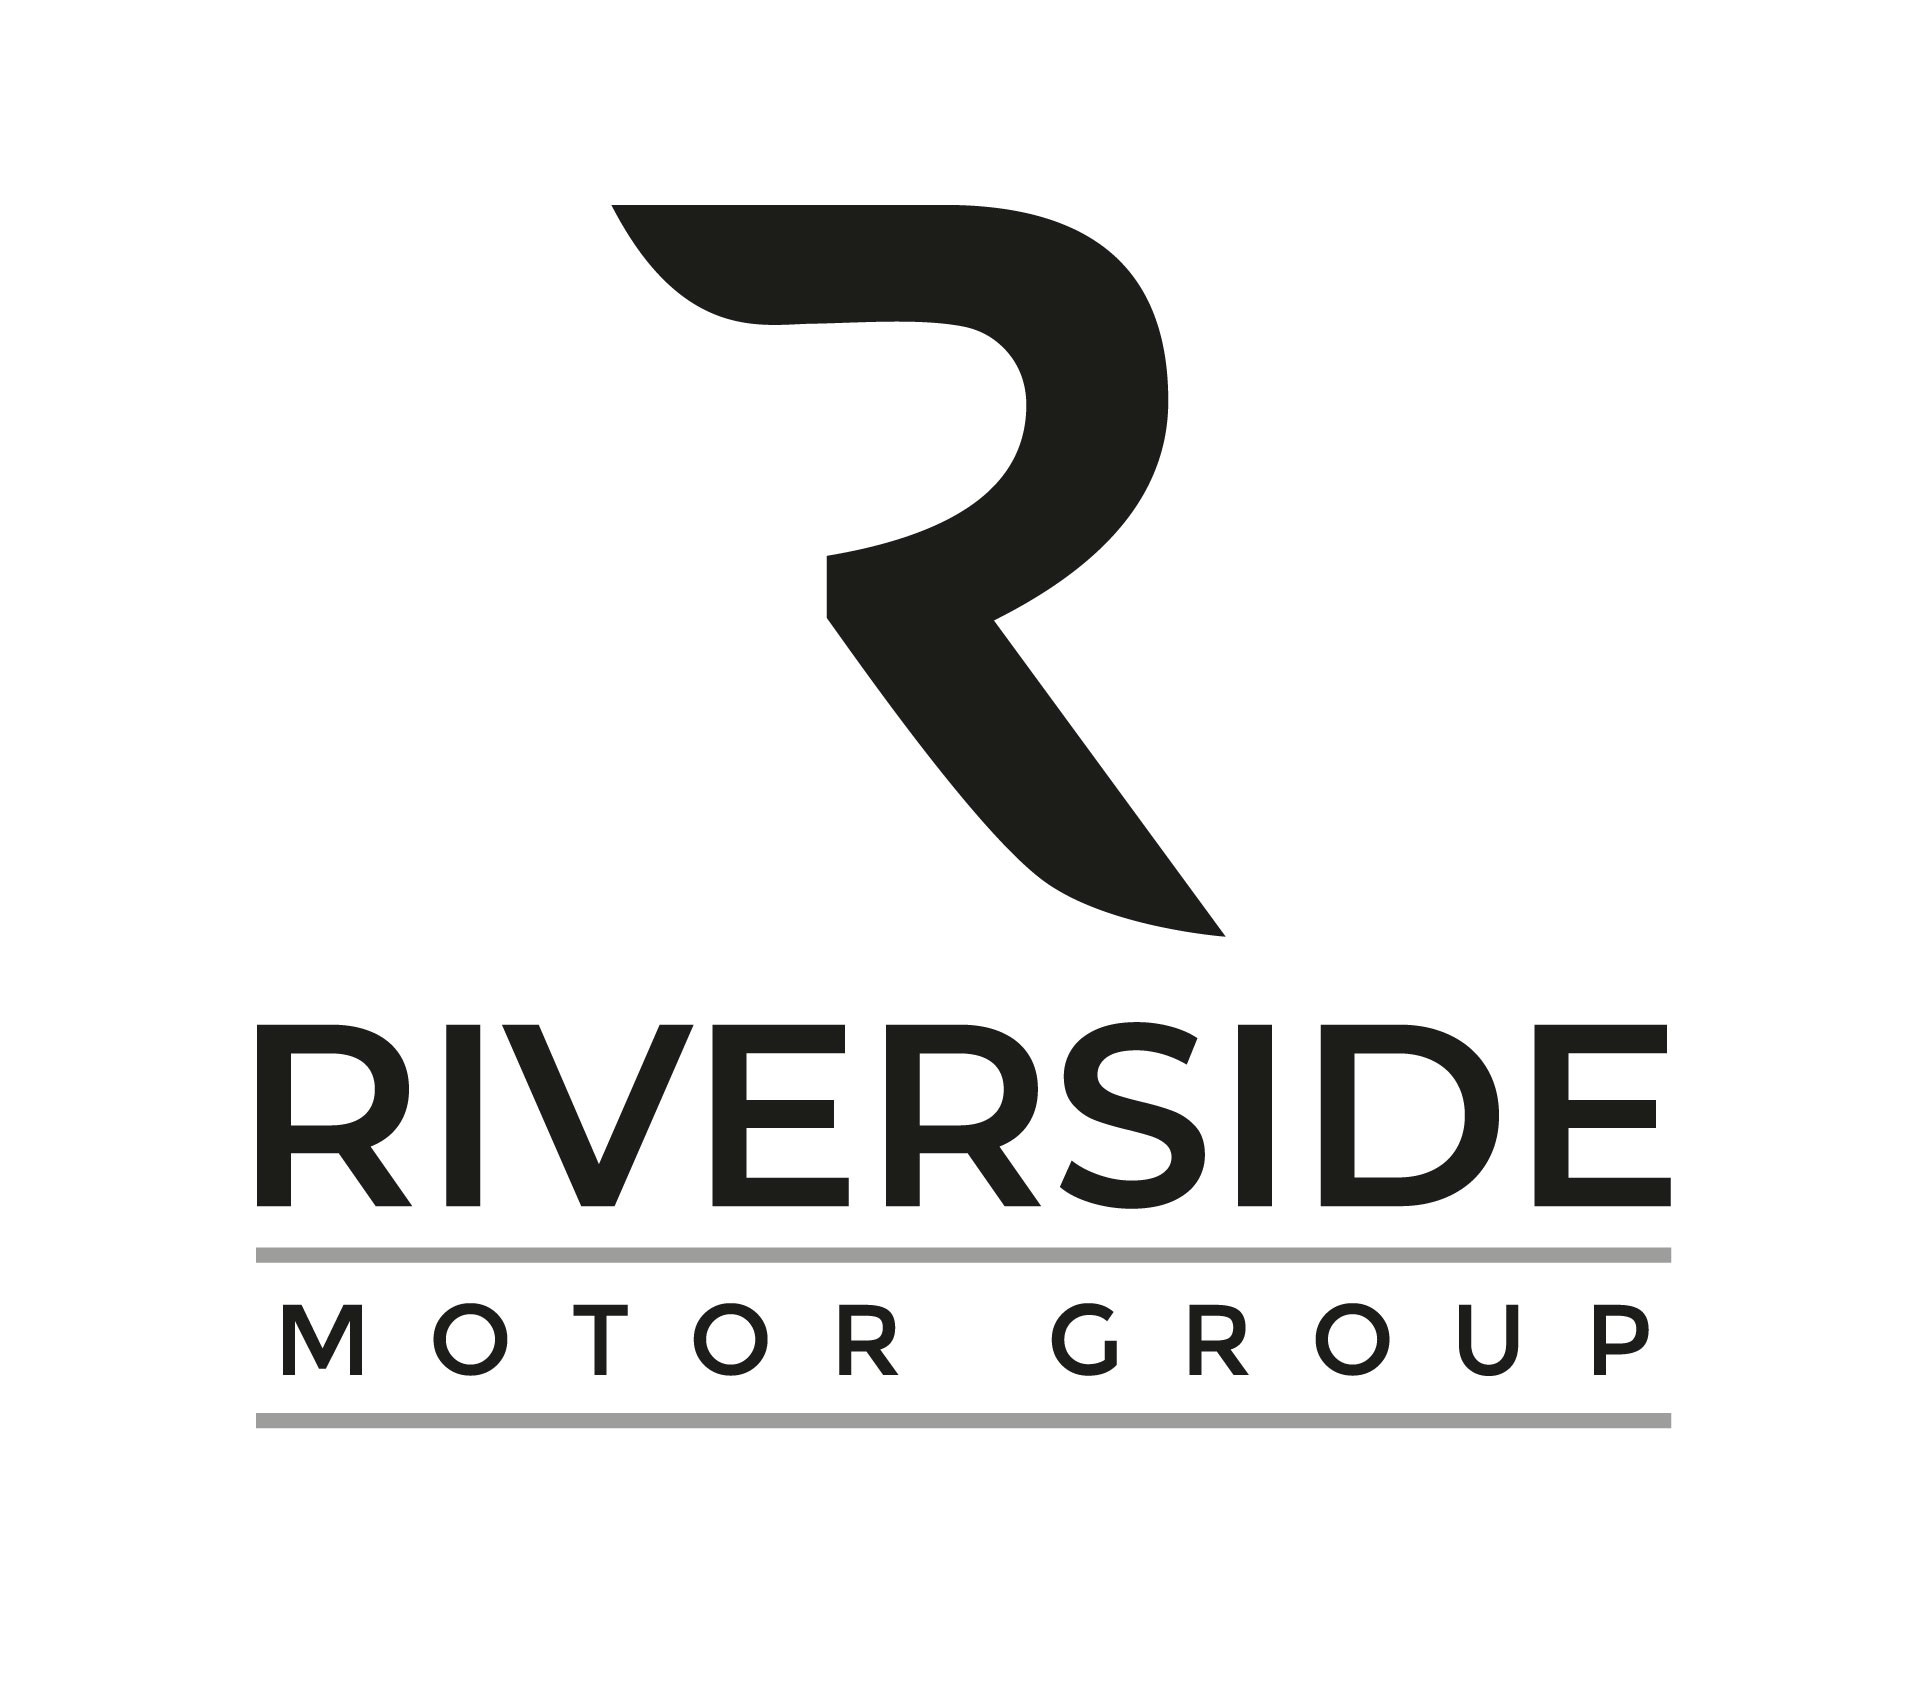 Riverside Motor Group